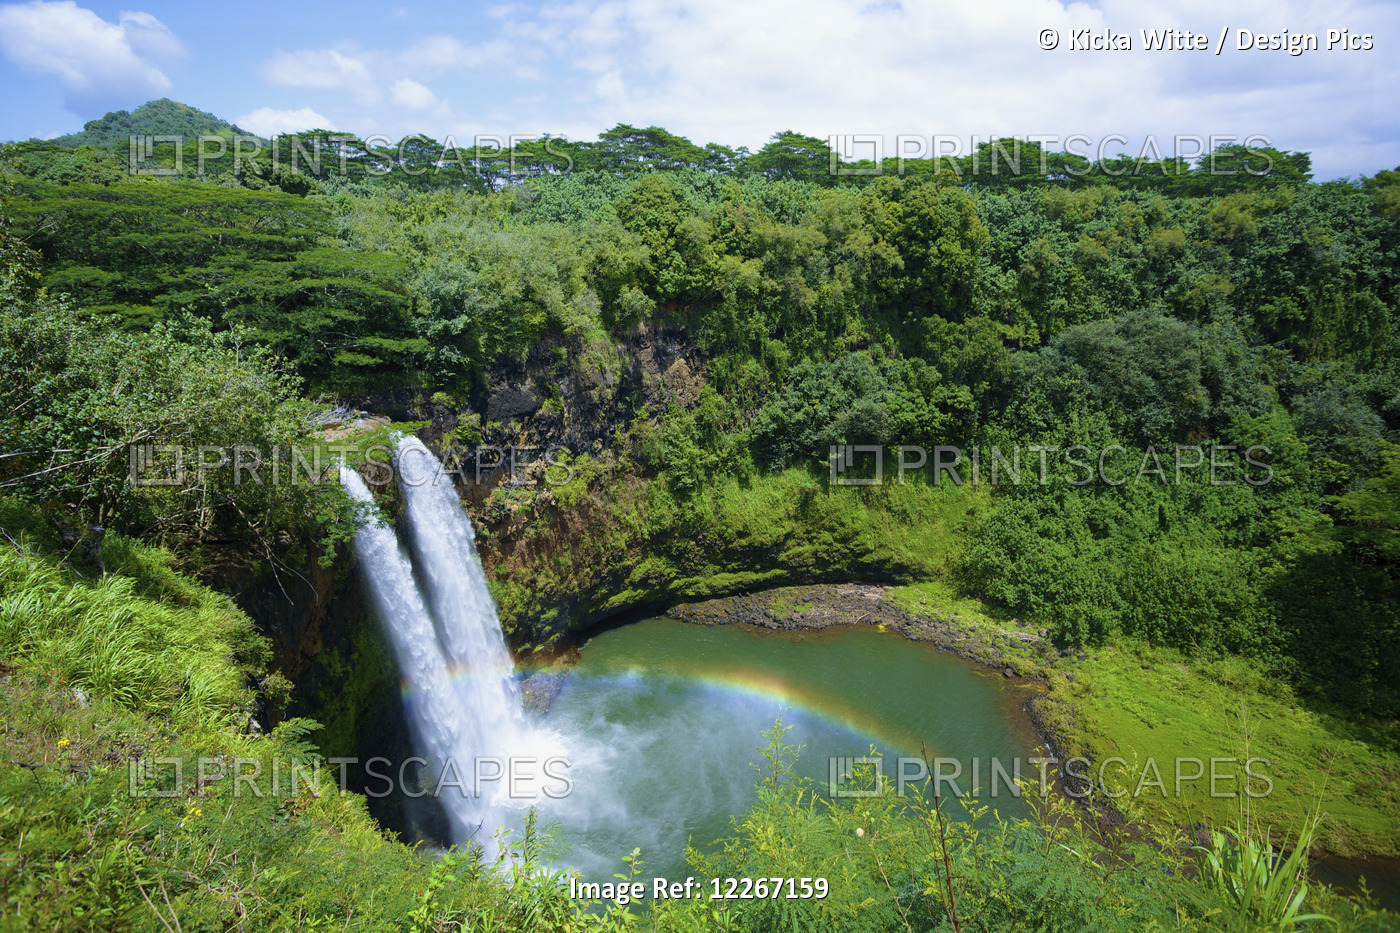 Wailua Falls; Kauai, Hawaii, United States Of America